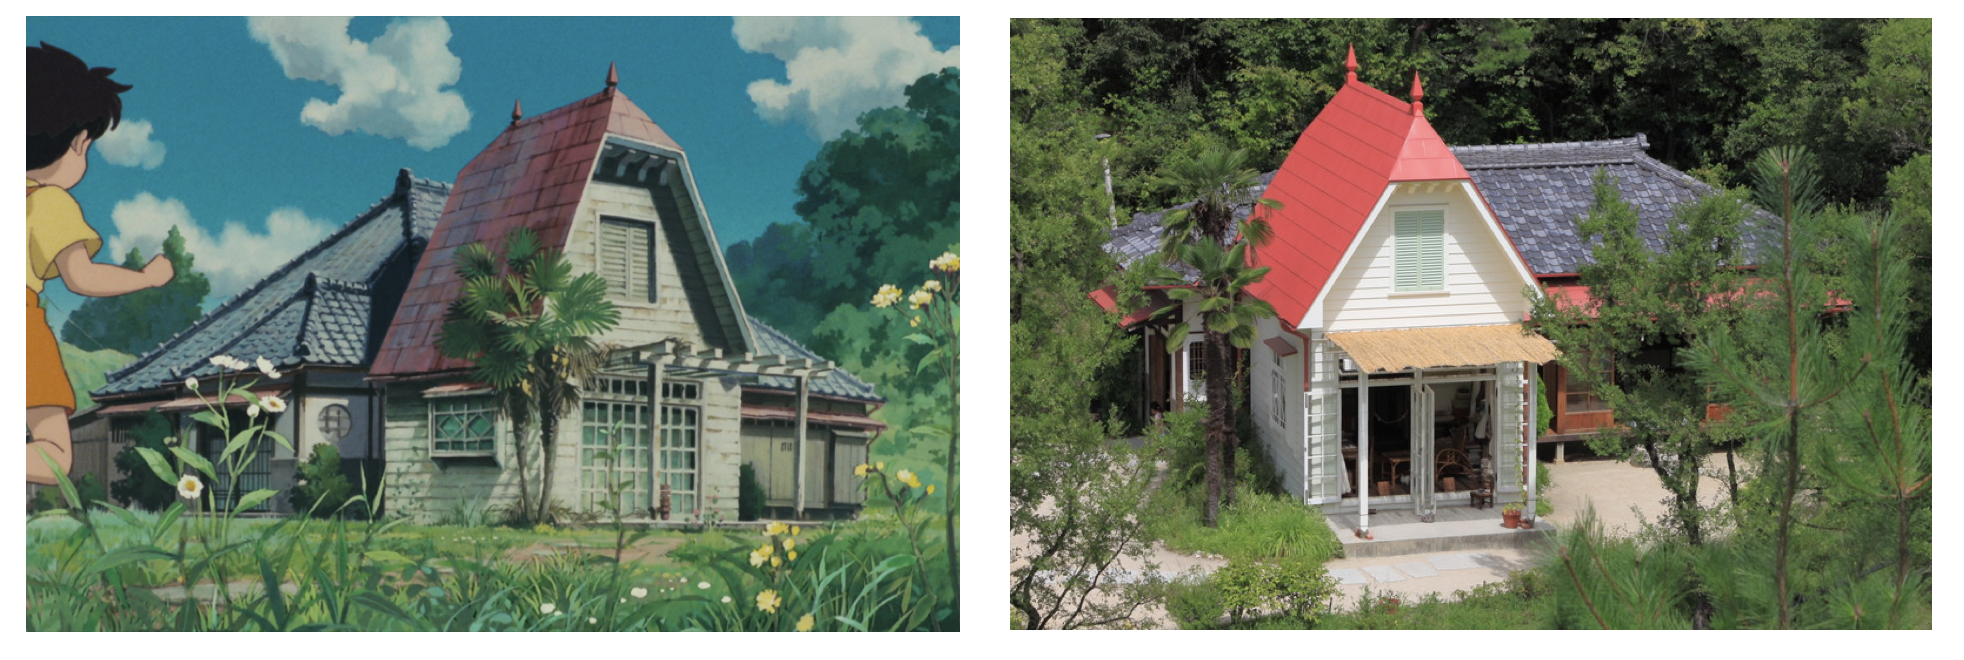 Studio Ghibli Films' Real-Life Locations in Japan